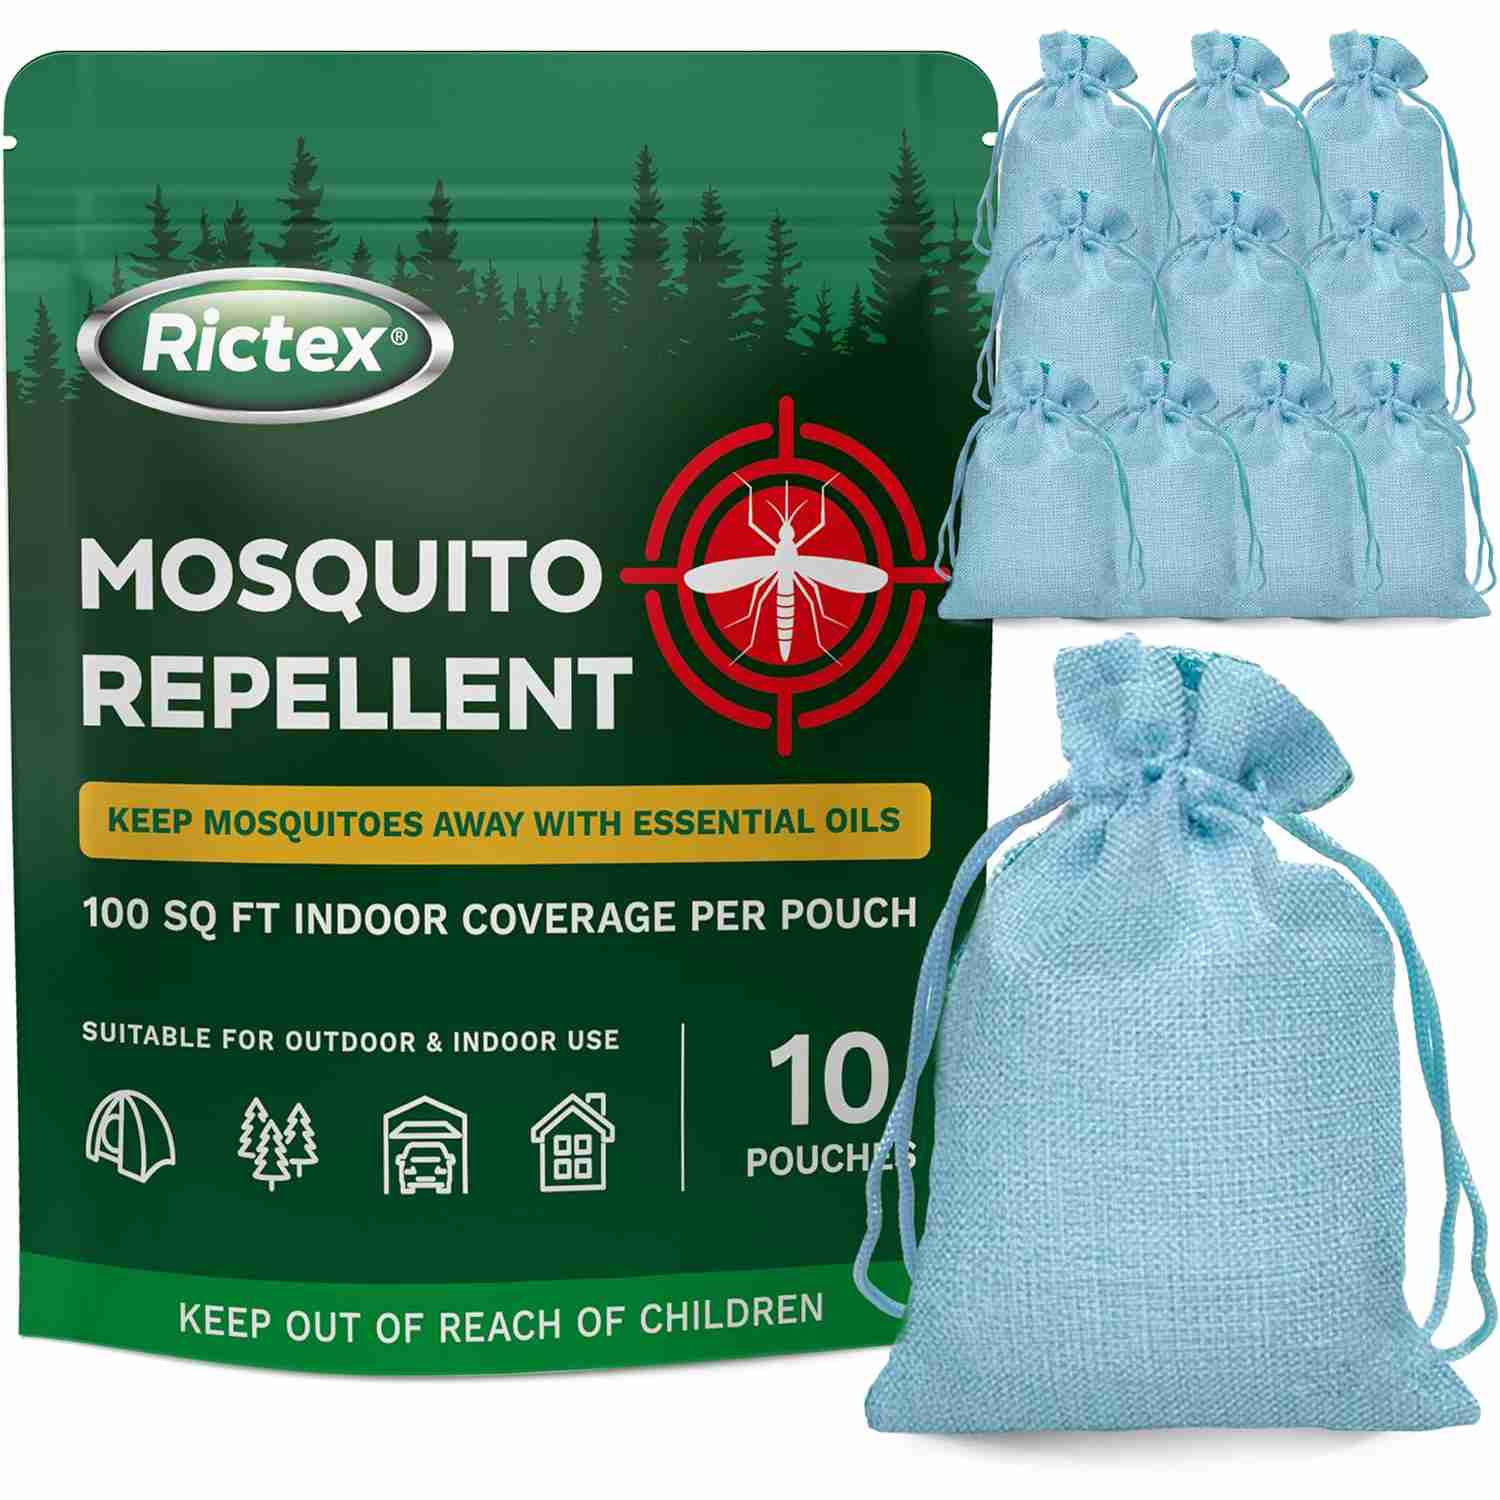 citronella-oil-mosquito-repellent with cash back rebate